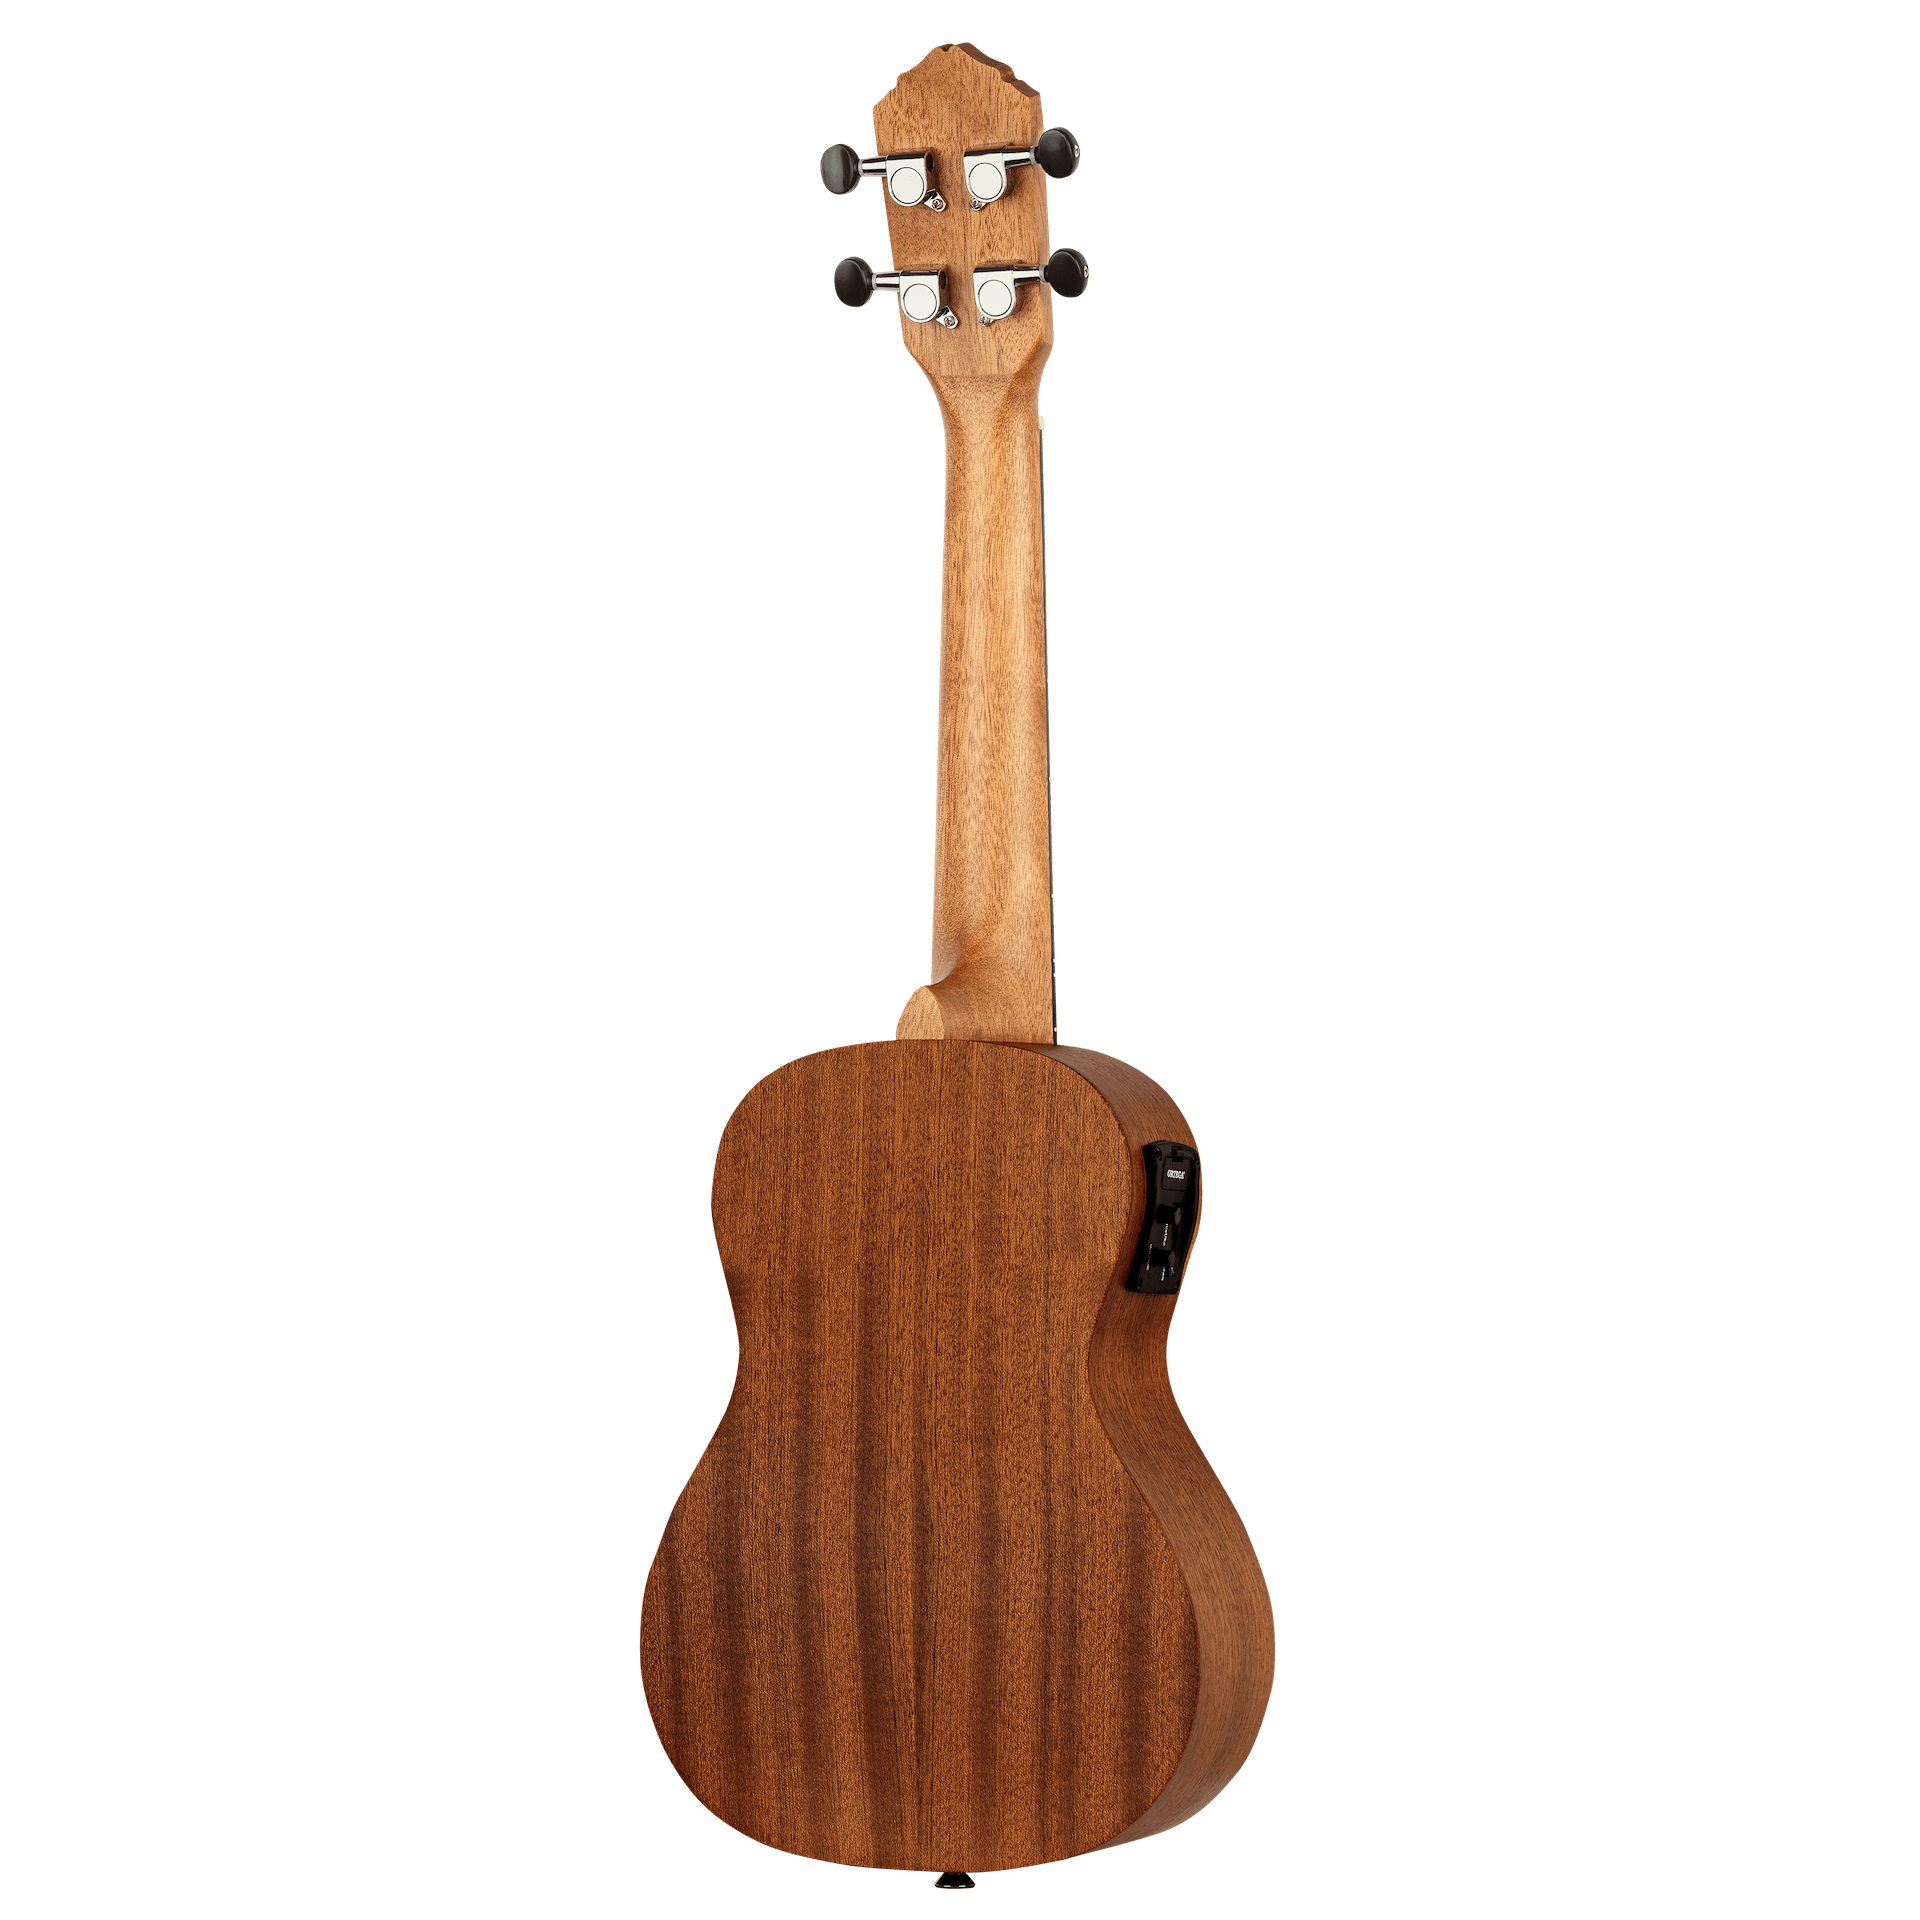 Acoustic-Electric Concert Ukulele - Natural Sapele with Bag - Timber Series Ukulele